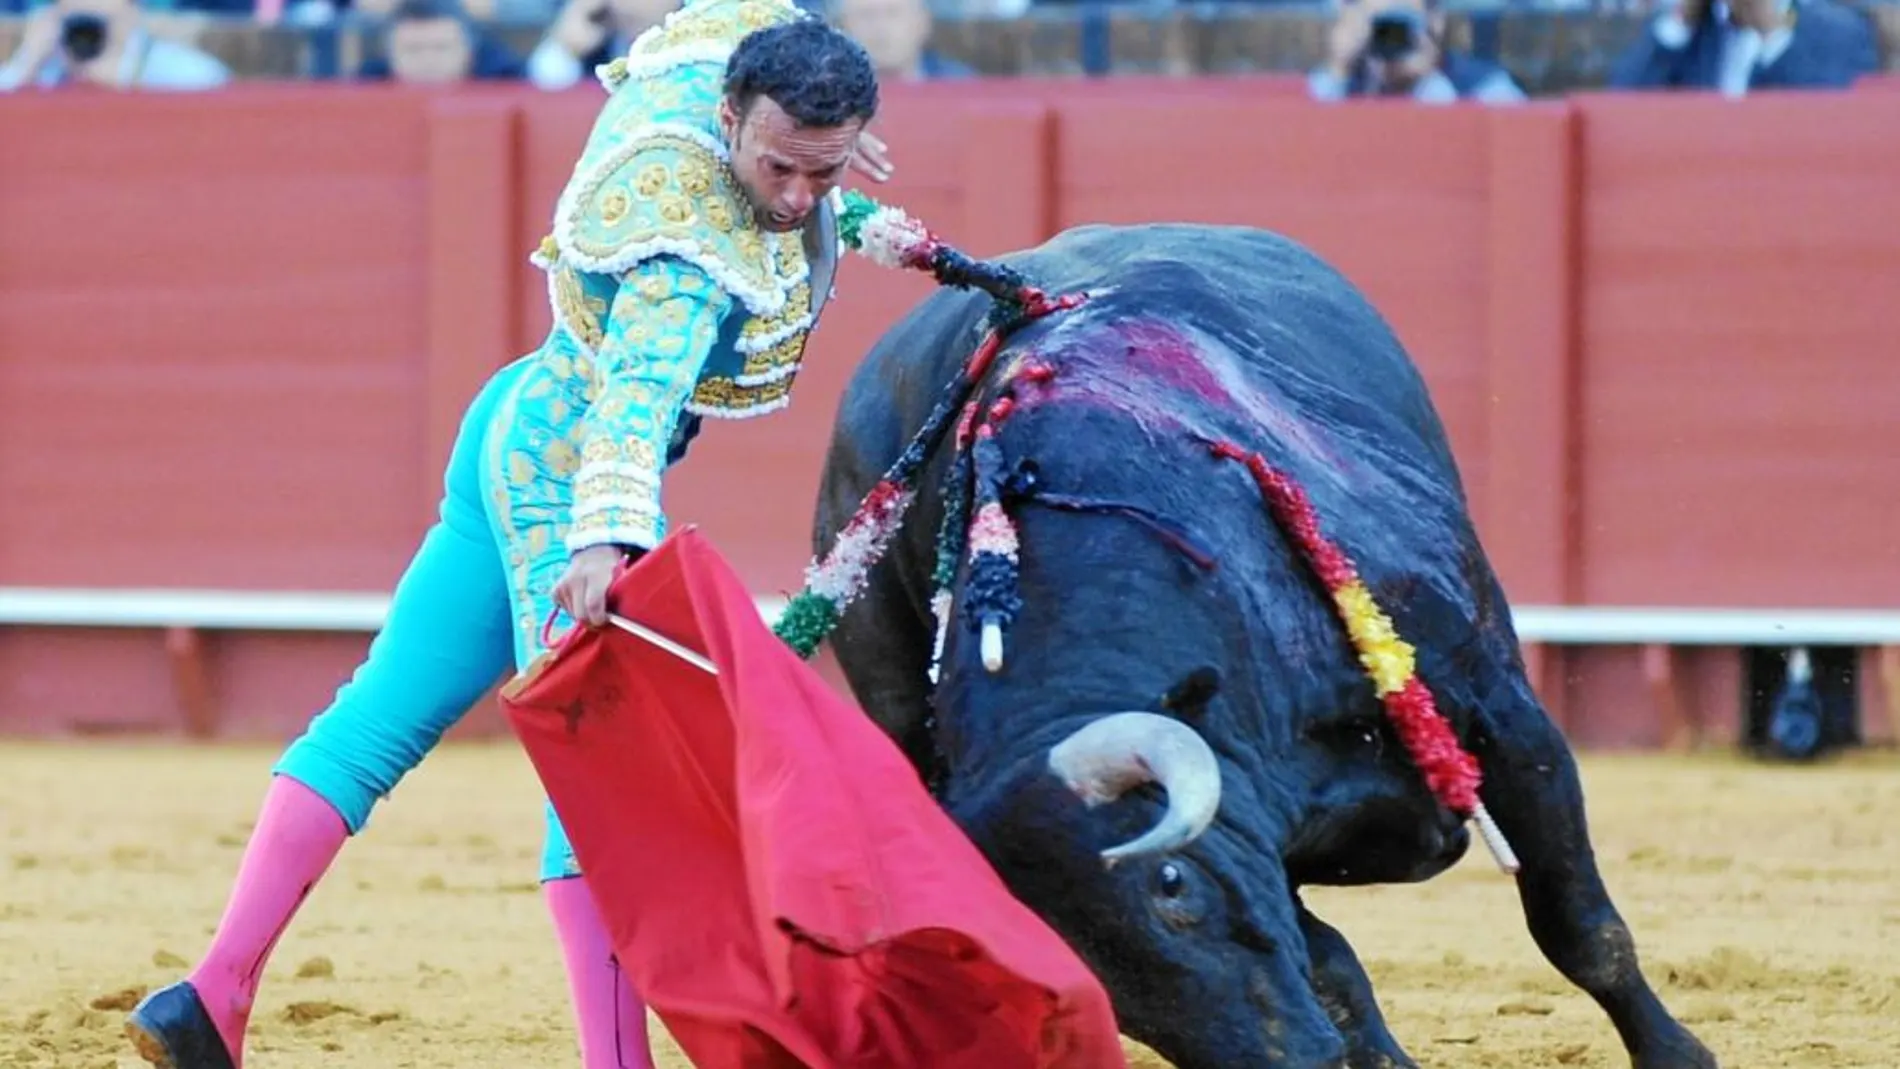 Antonio Ferrera toreando con la muleta, ayer, en la Real Maestranza de Sevilla